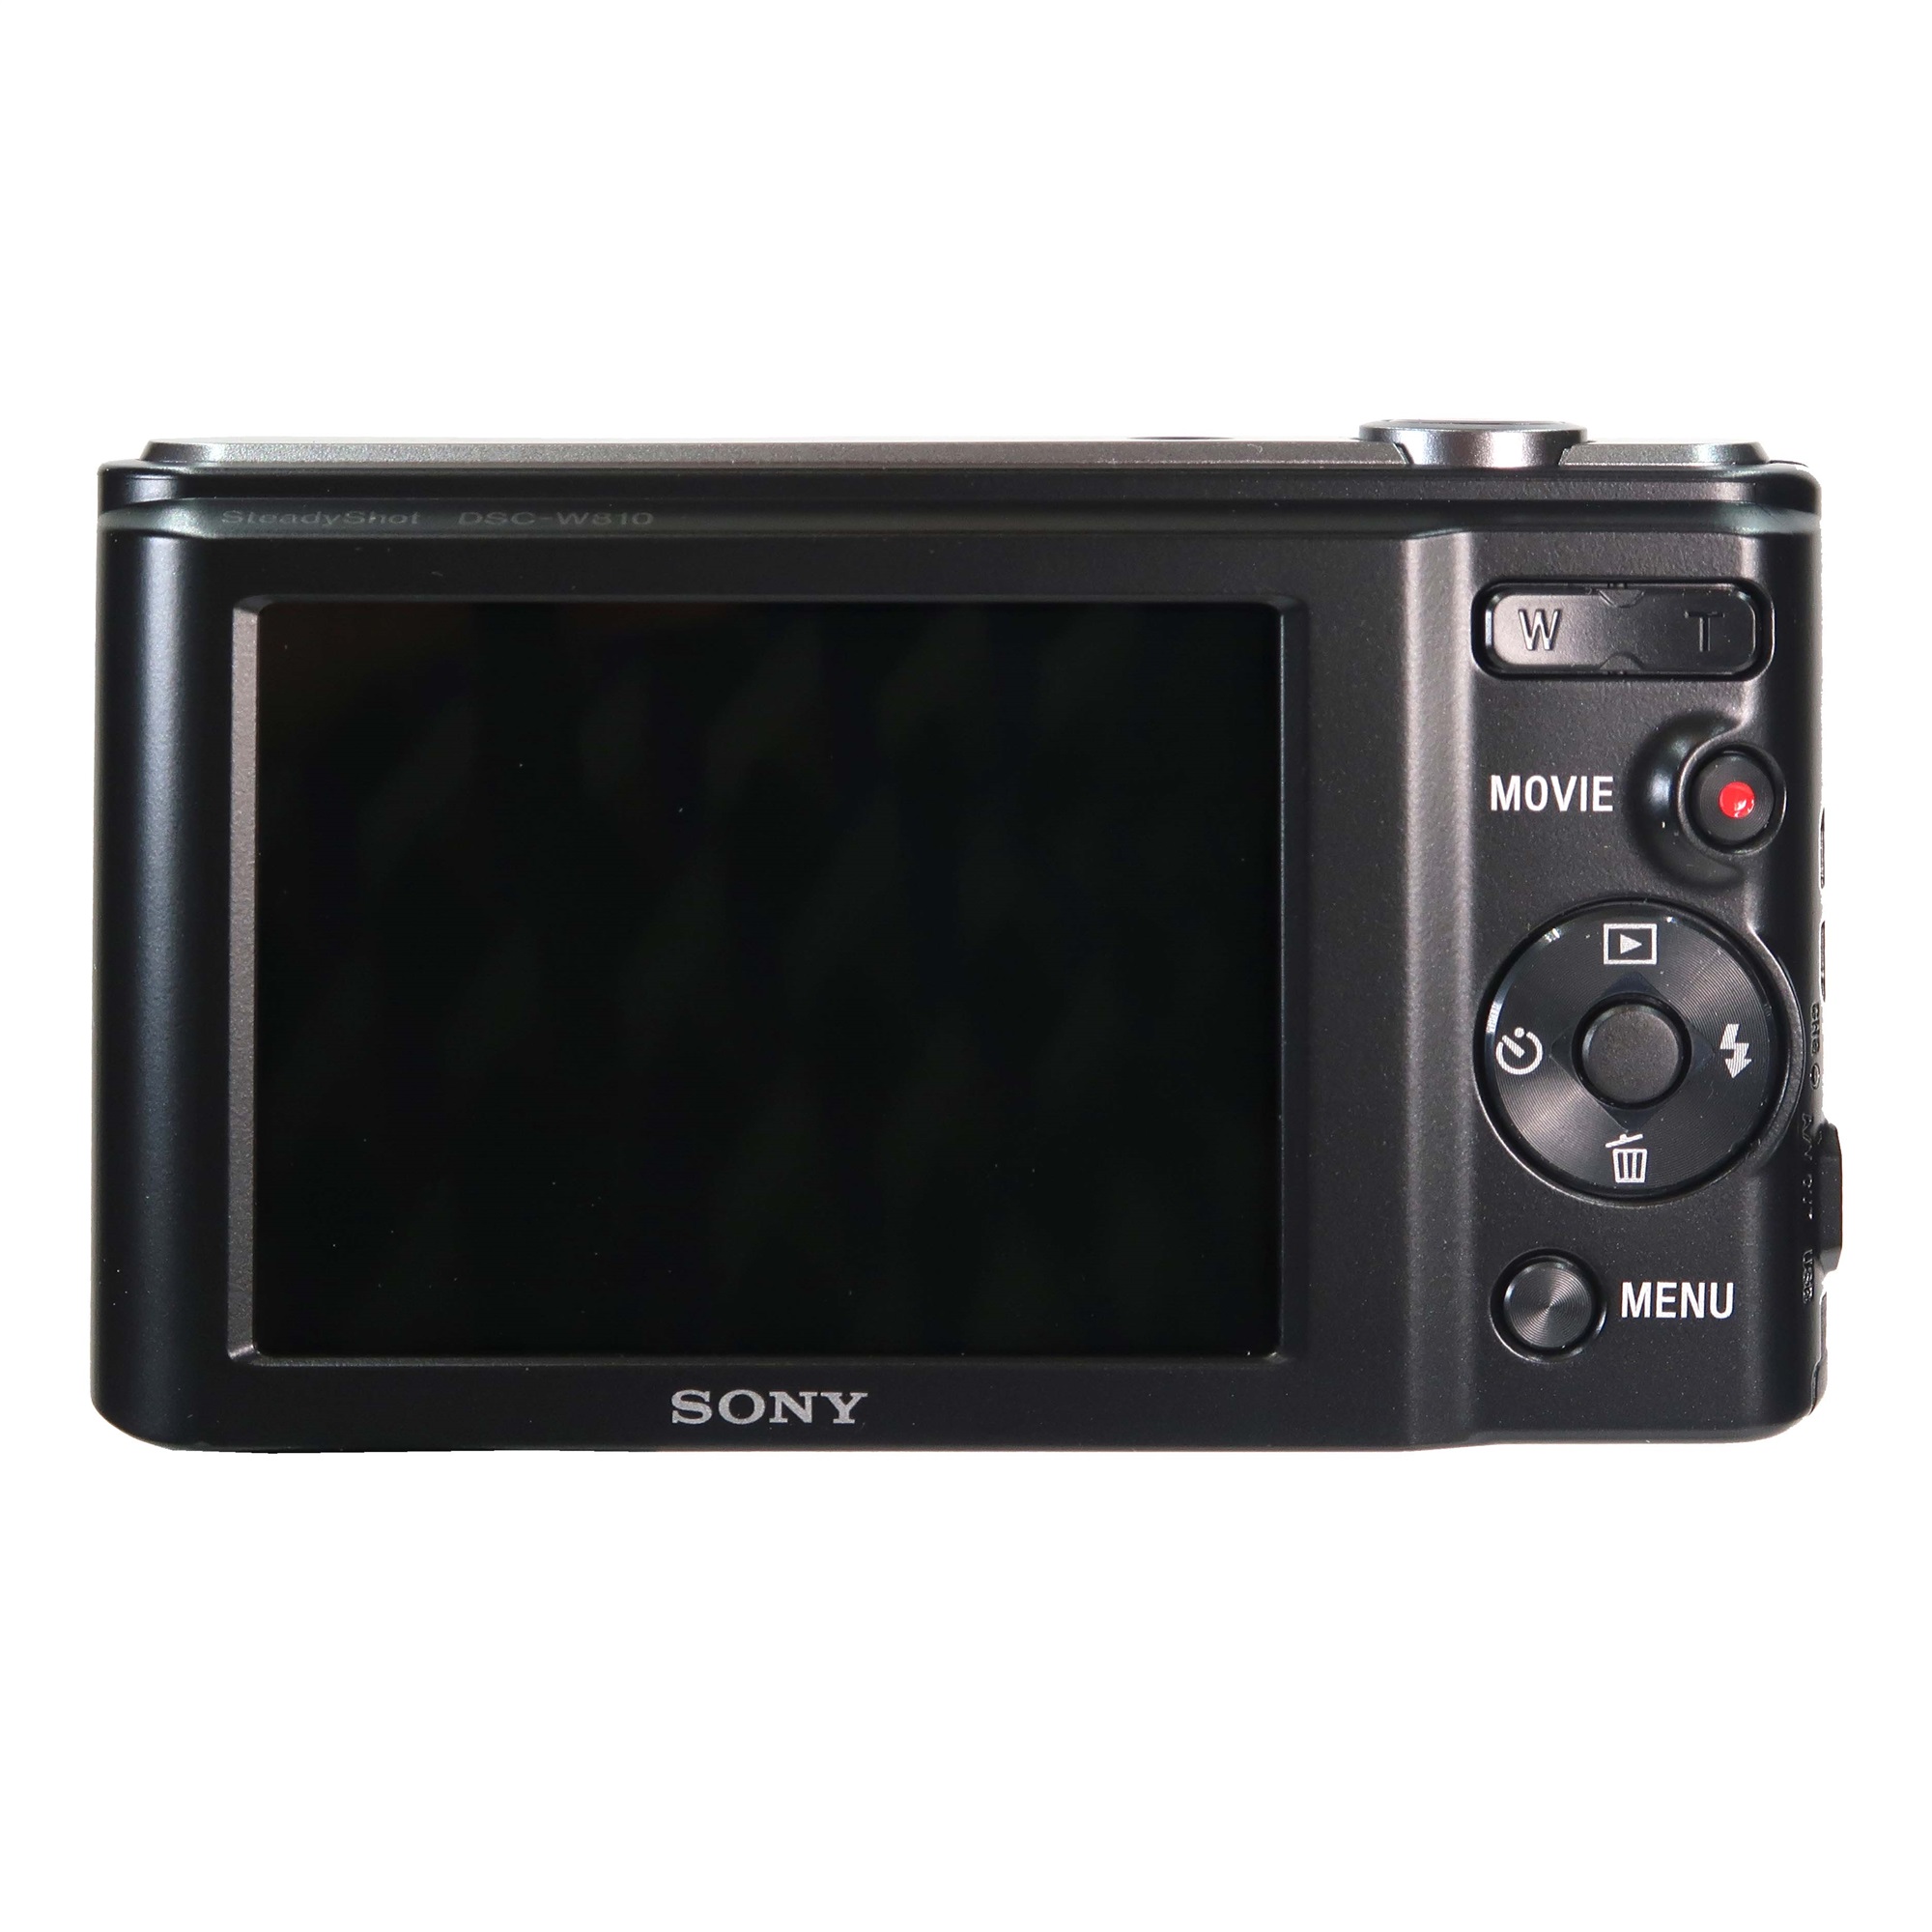 Sony Cyber-shot DSC-W810 Digital Camera Black